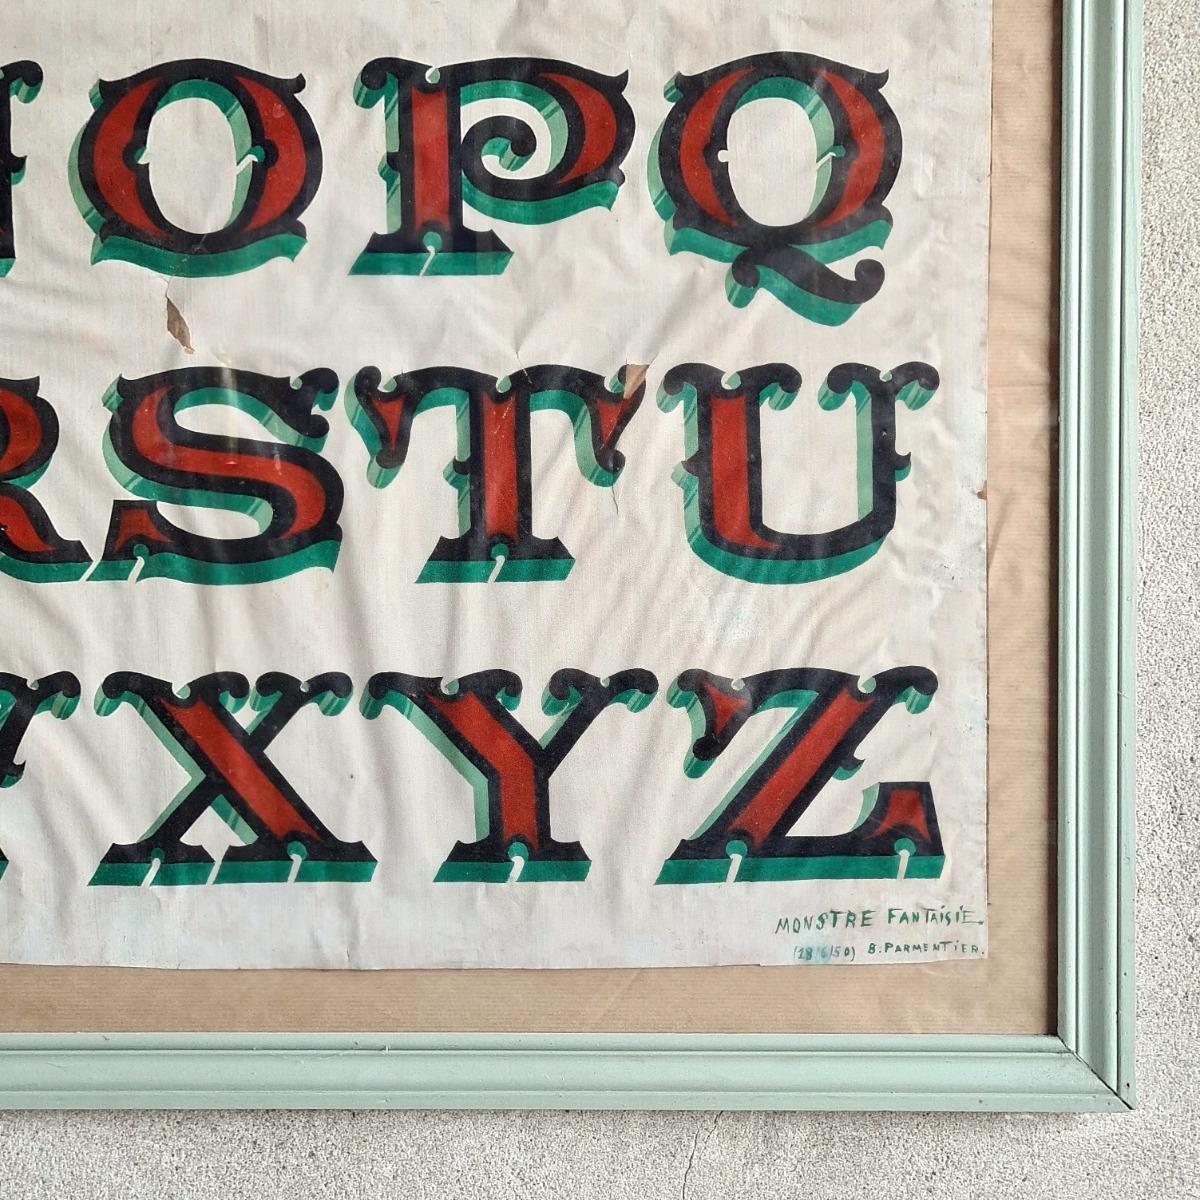 Framed alphabet